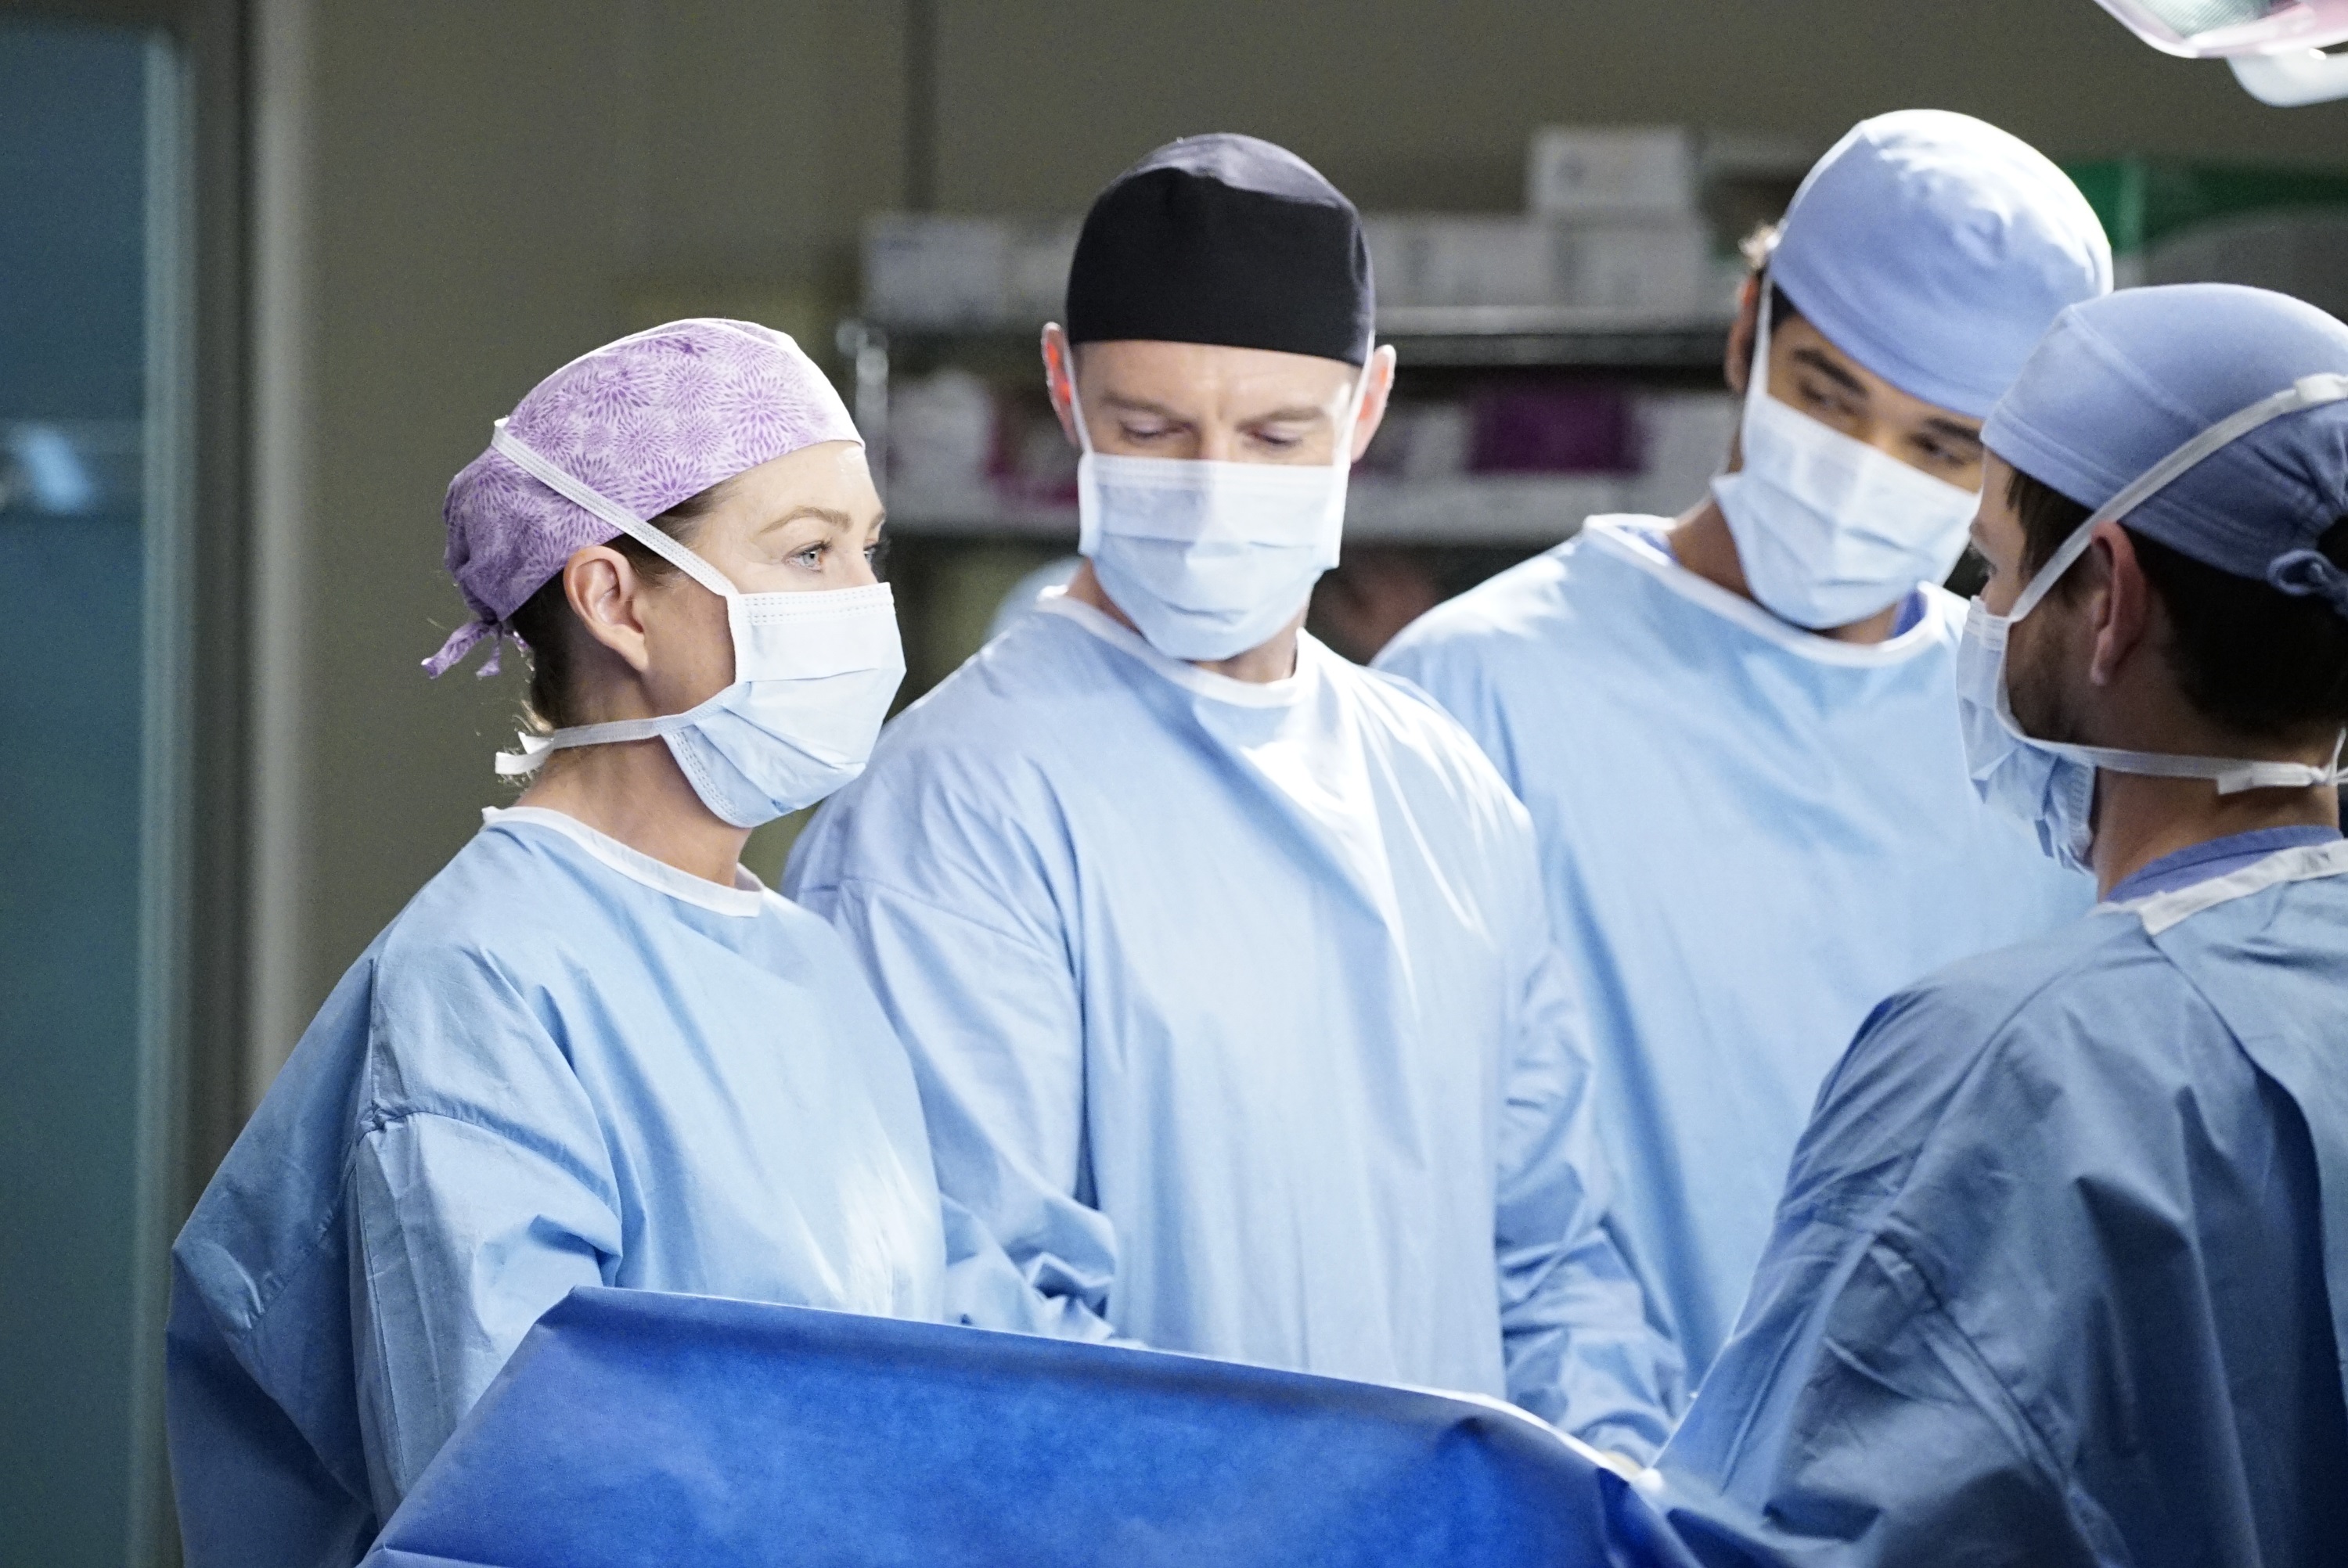 'Grey's Anatomy' stars Ellen Pompeo and Richard Flood